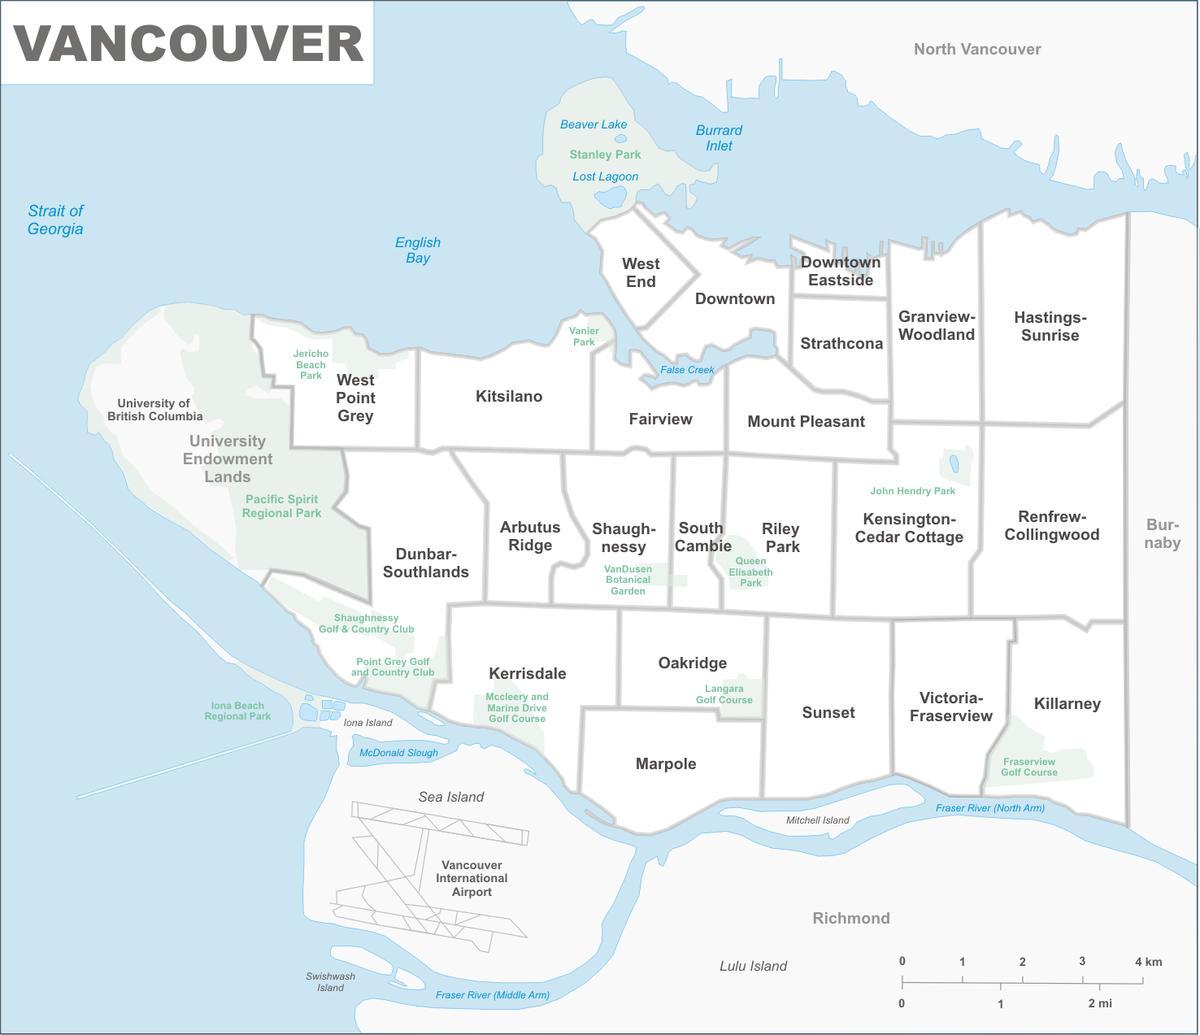 Vancouver ilçe haritası 